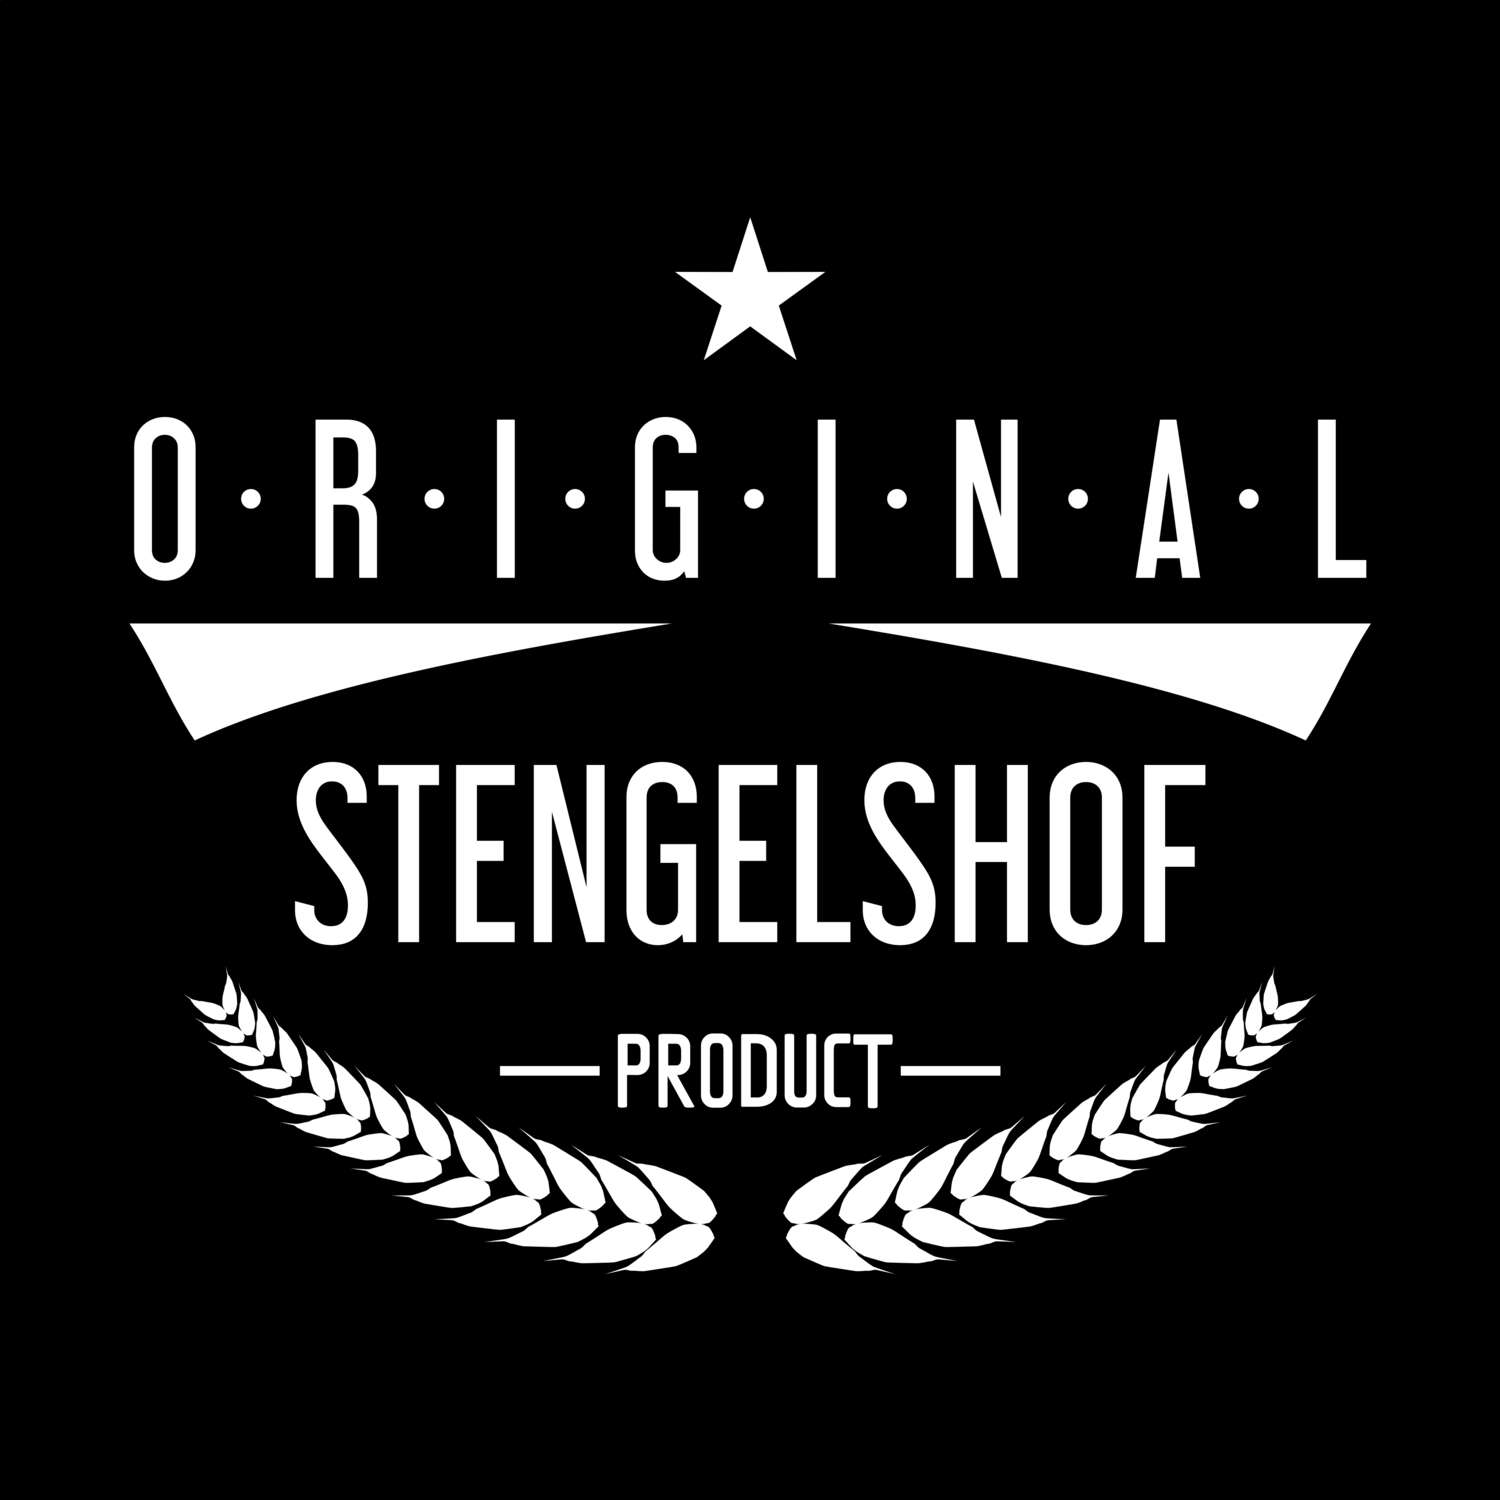 Stengelshof T-Shirt »Original Product«